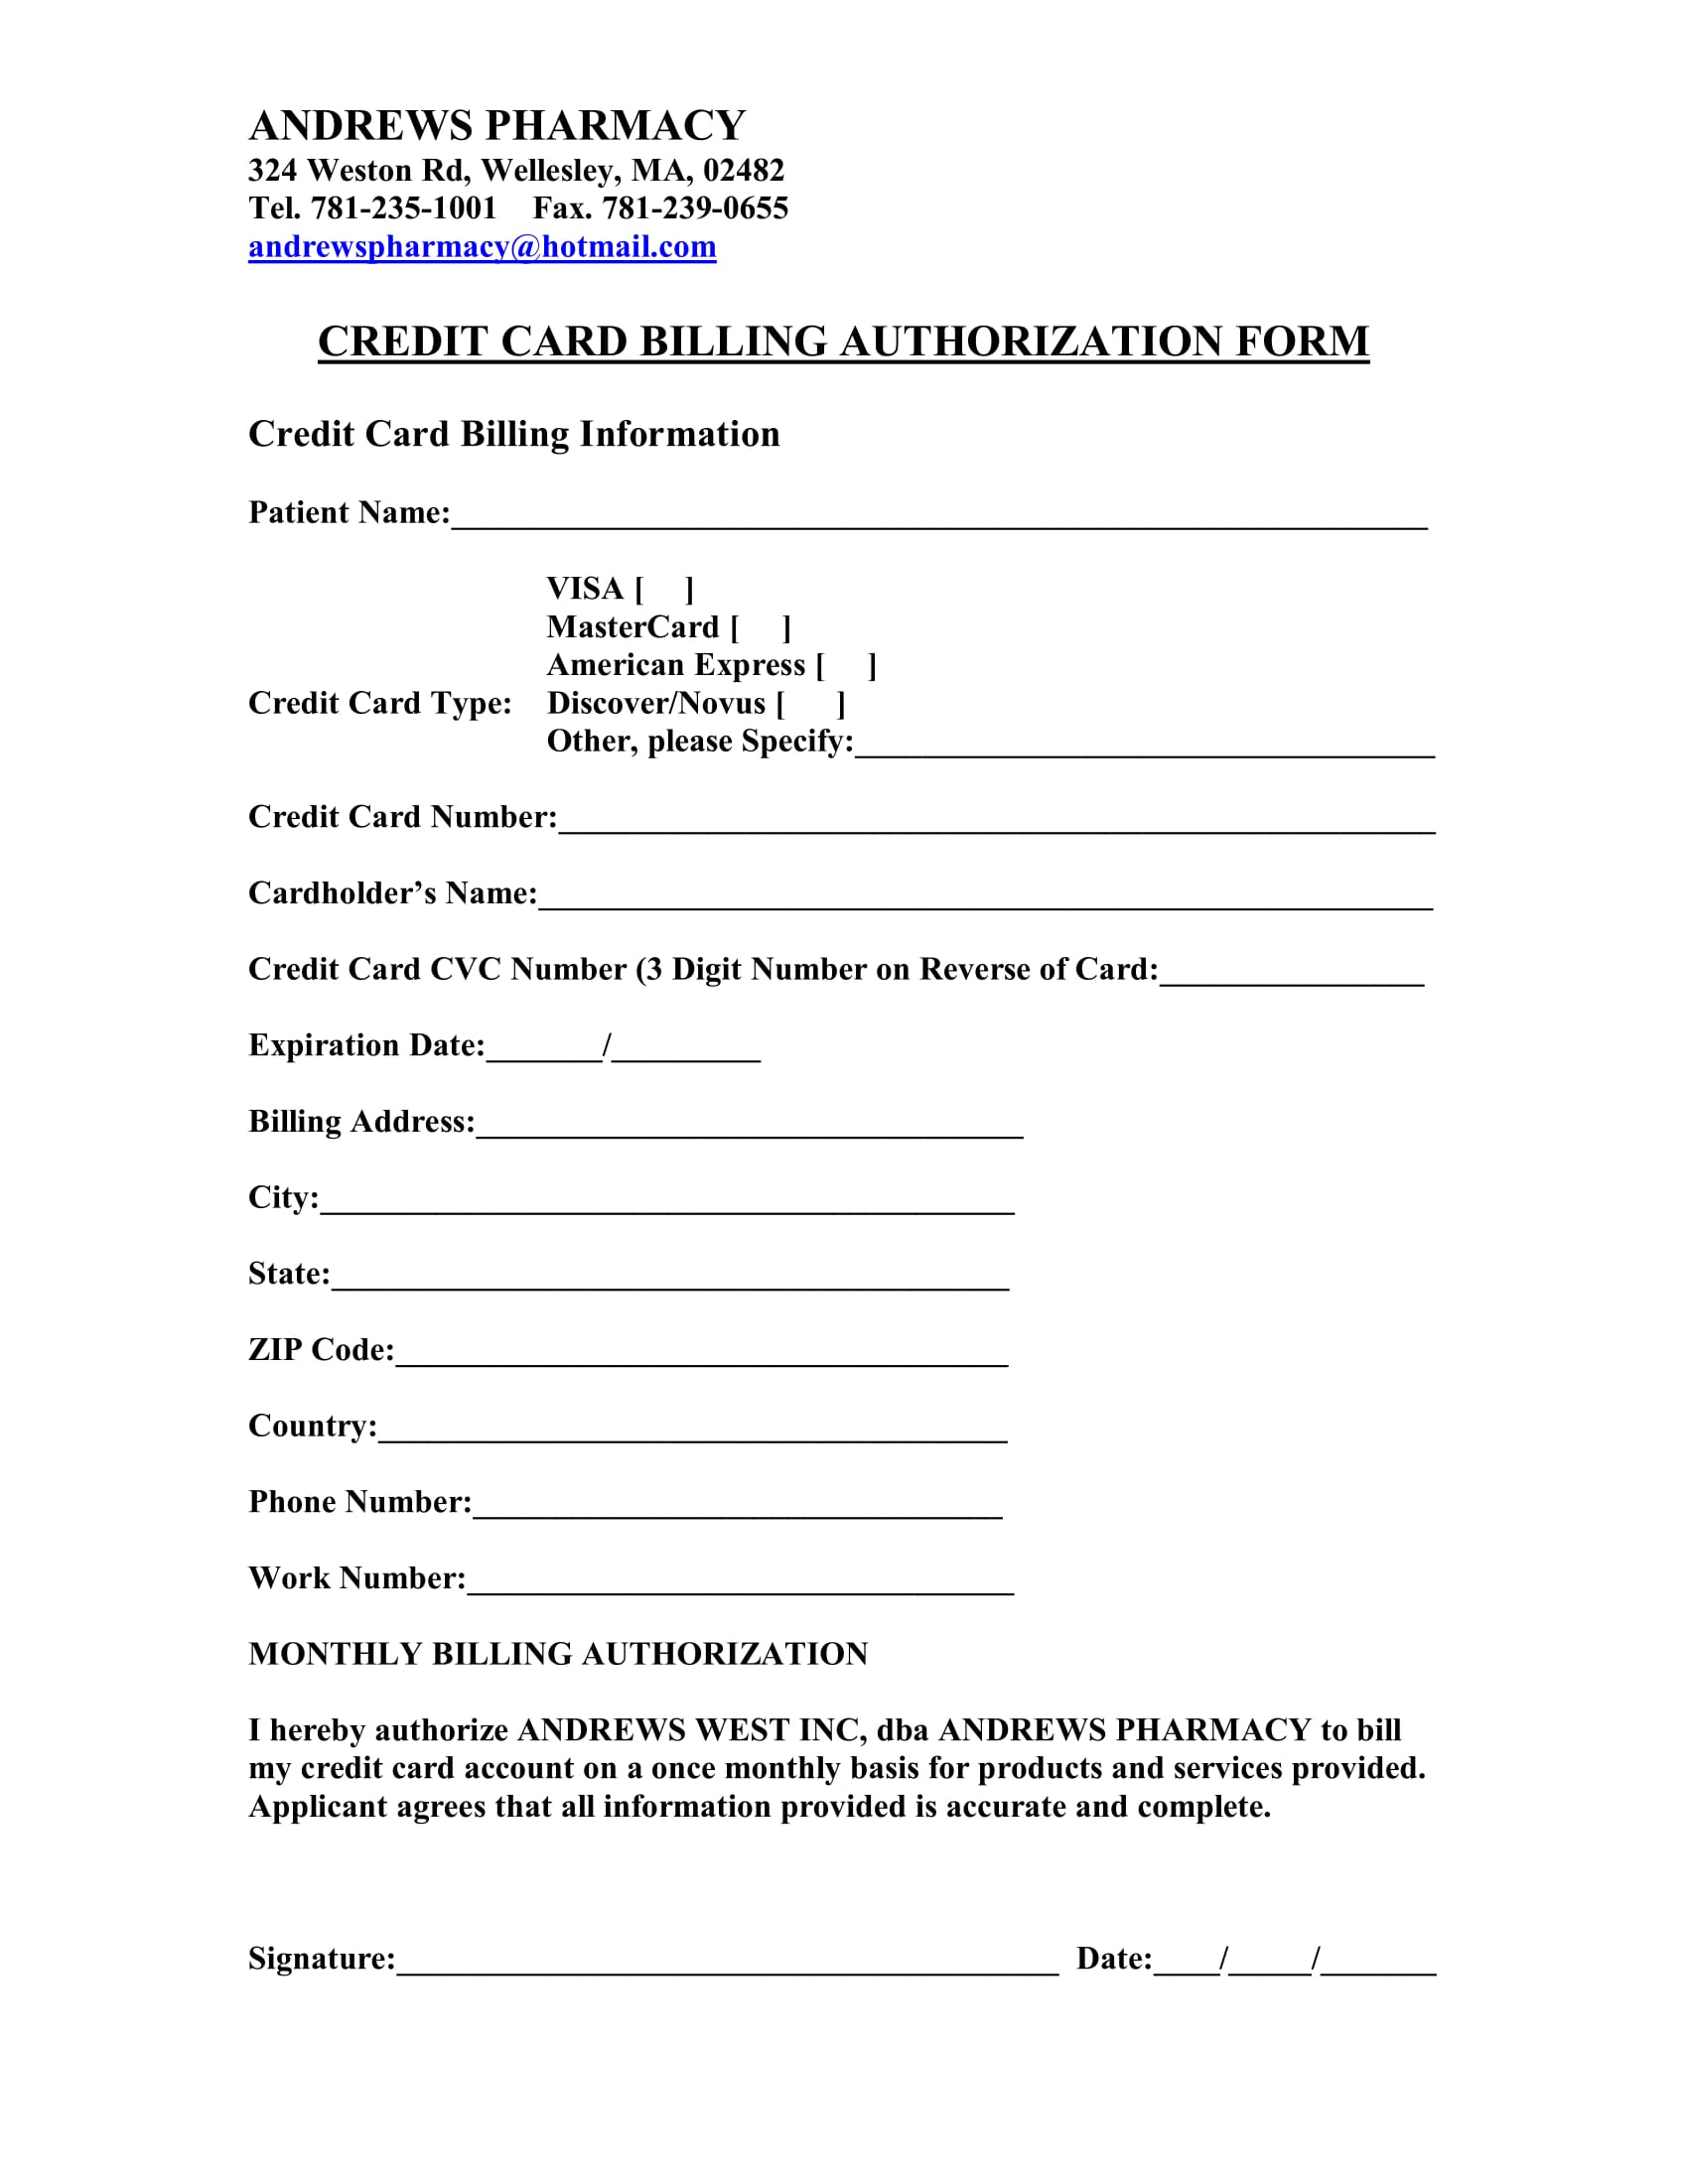 Southwest Credit Card Log On Staybridge Suites Credit Card Authorization Form